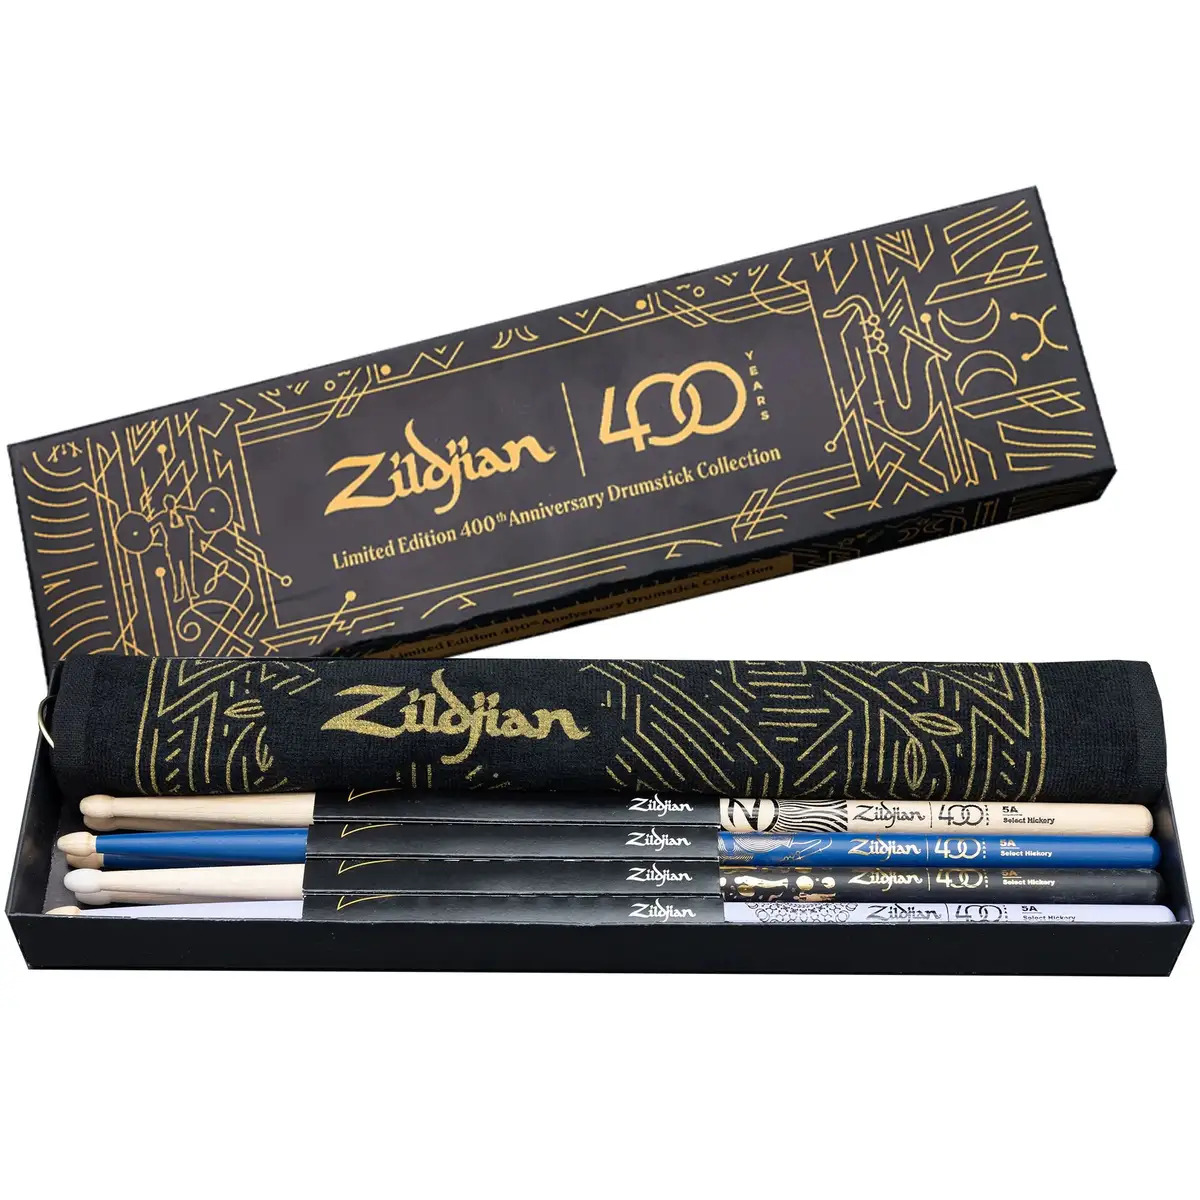 Zildjian Drumsticks 400th Anniversary Bundle - Limited Edition